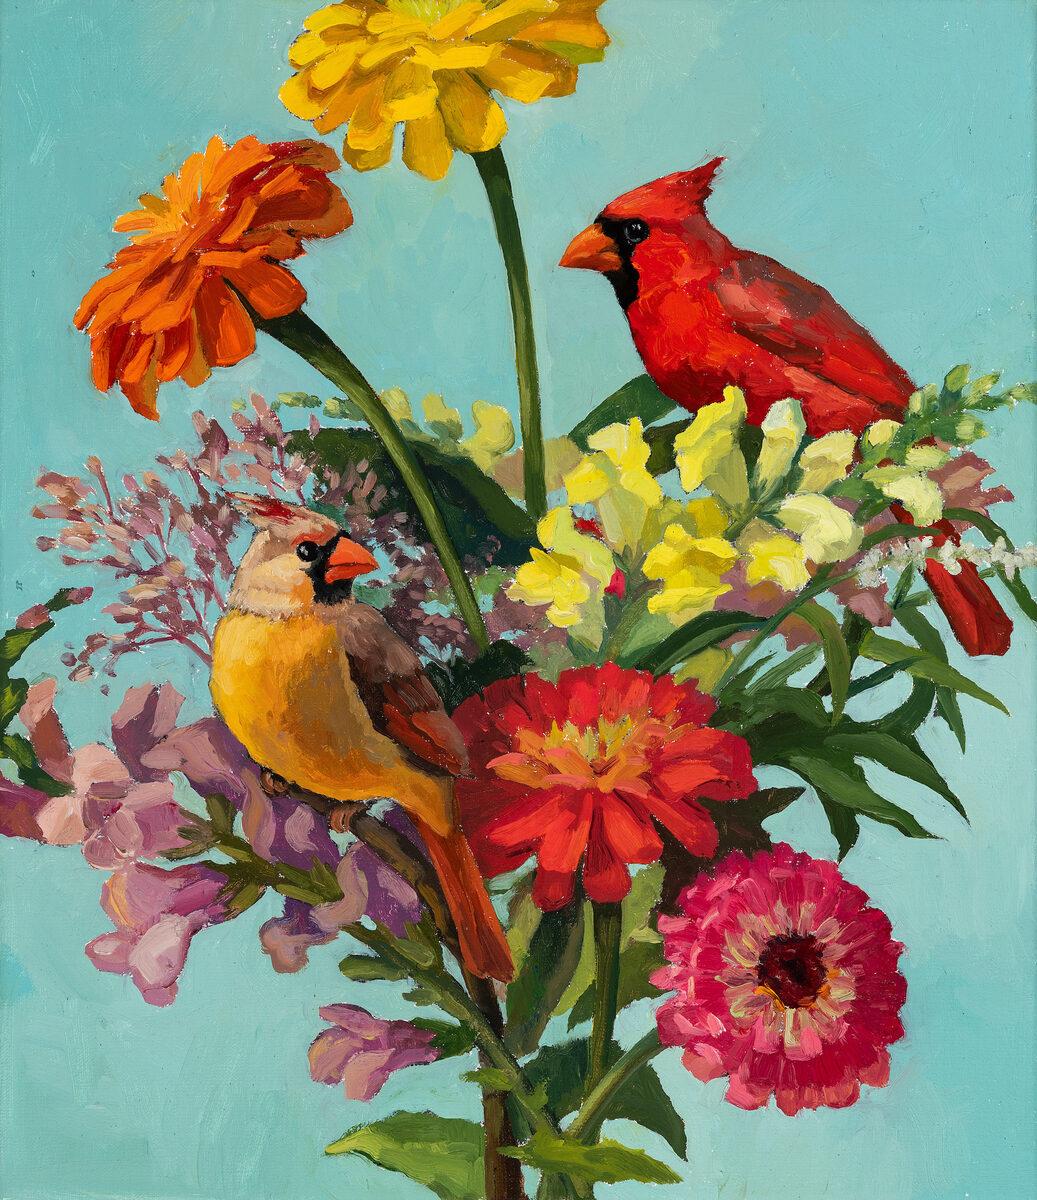 Edwina Lucas Landscape Painting - "Cardinal Rule" Two birds sitting among colorful flowers